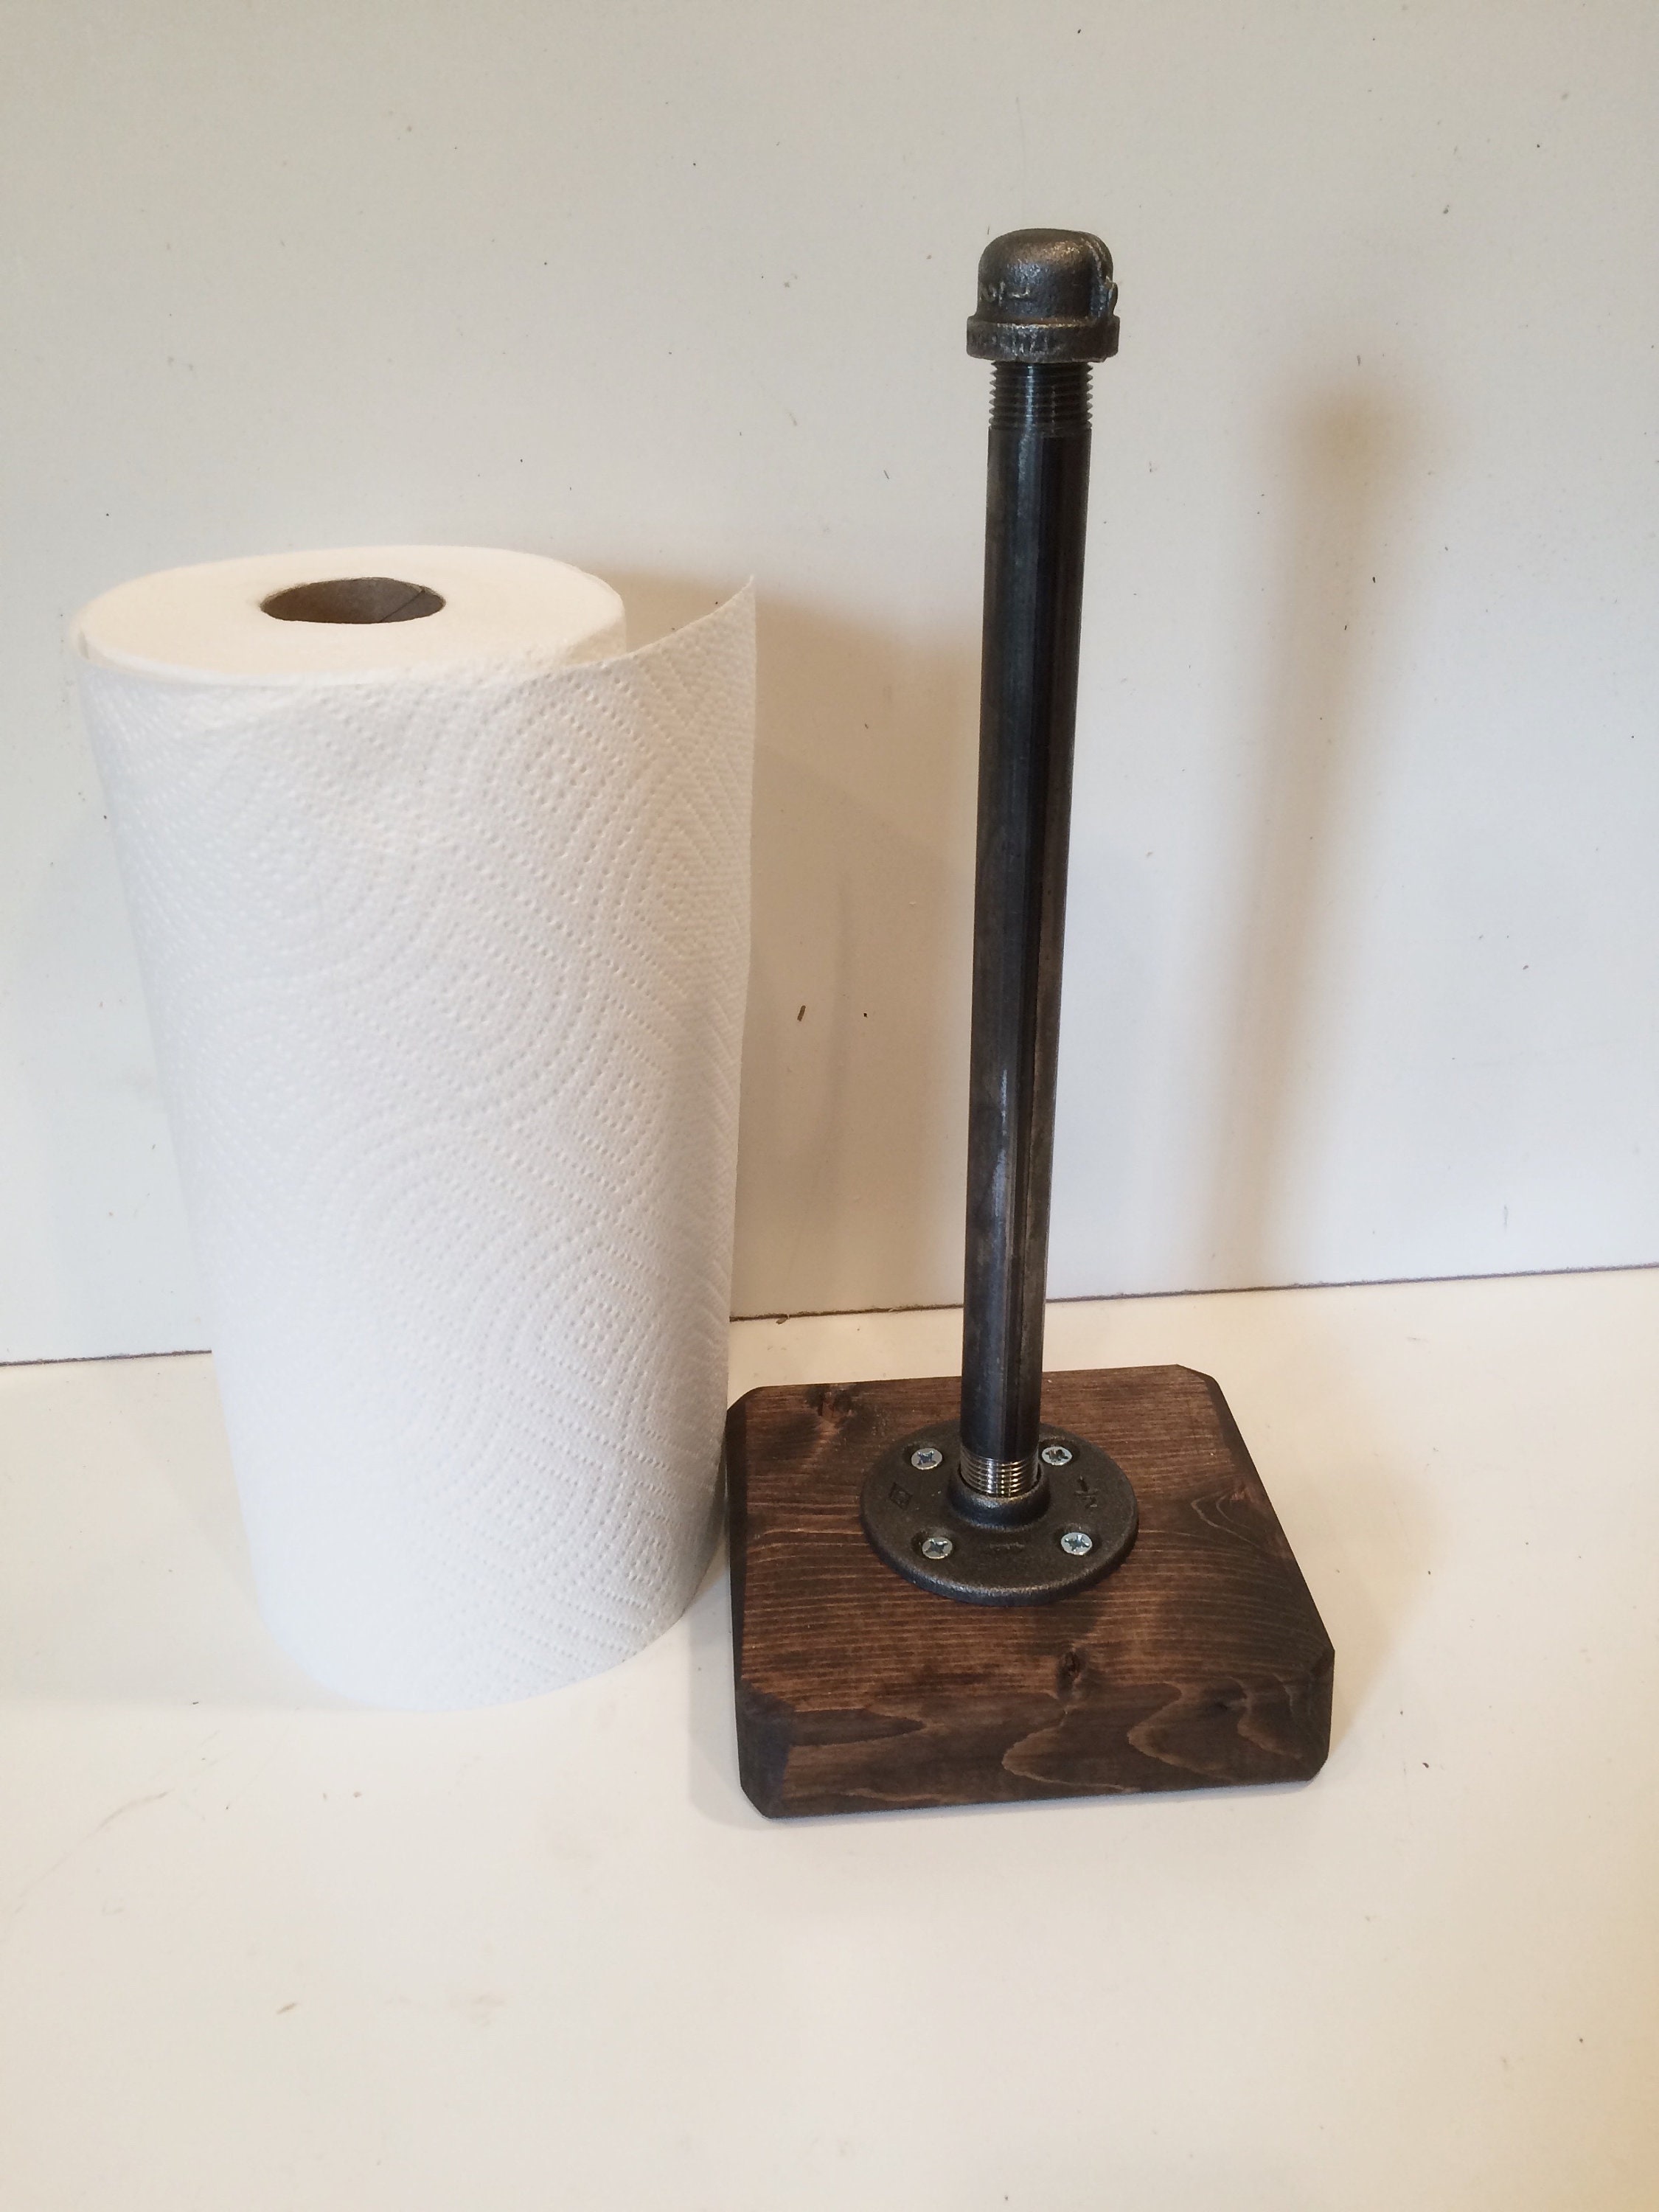 Paper Towel Holder Countertop, OBODING, Kitchen Paper Towel Stand Holder for Kitchen Organization and Storage, Paper Towel Holders for Standard and La